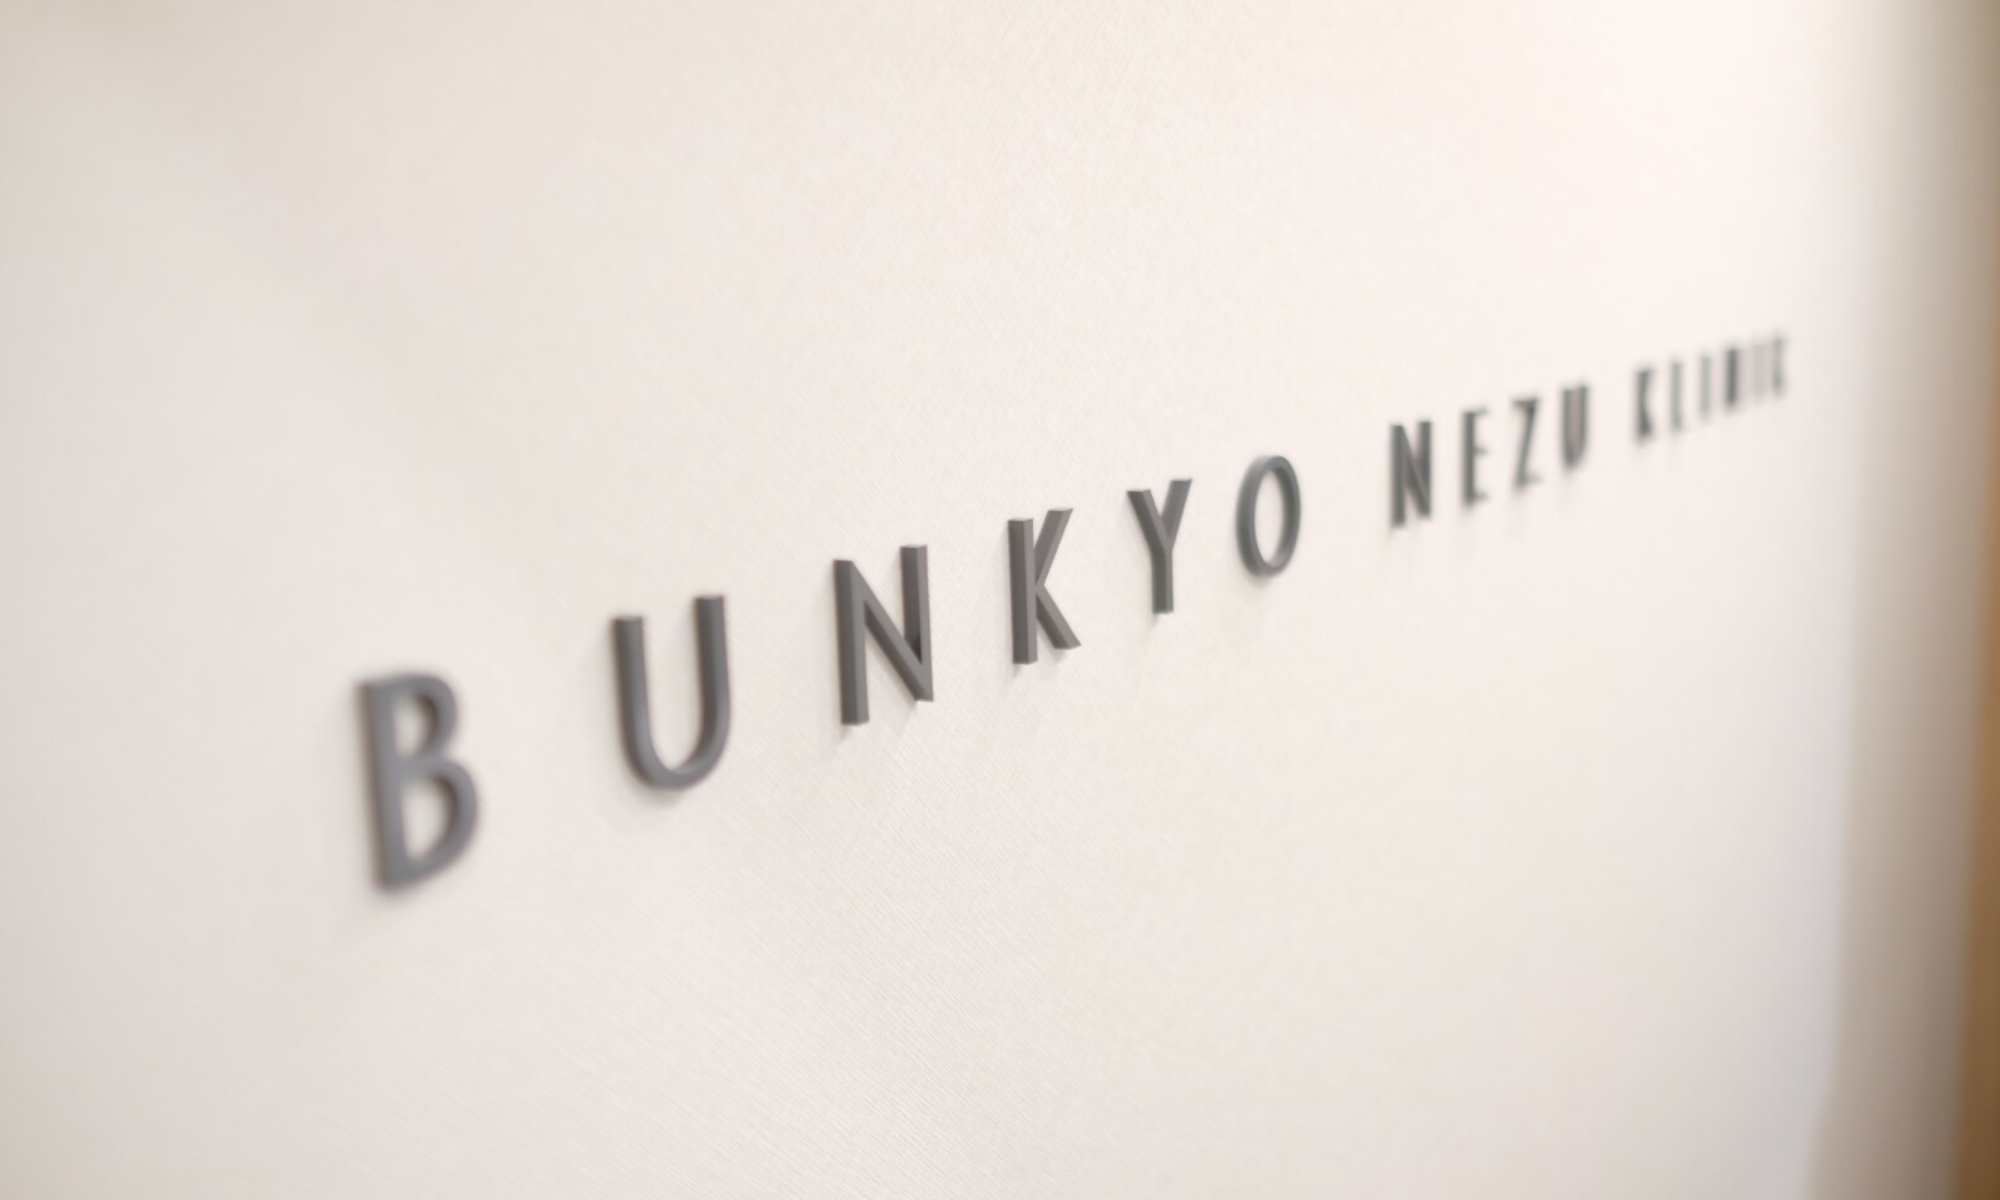 BUNKYO NEZU KLINIK_ロゴタイプ